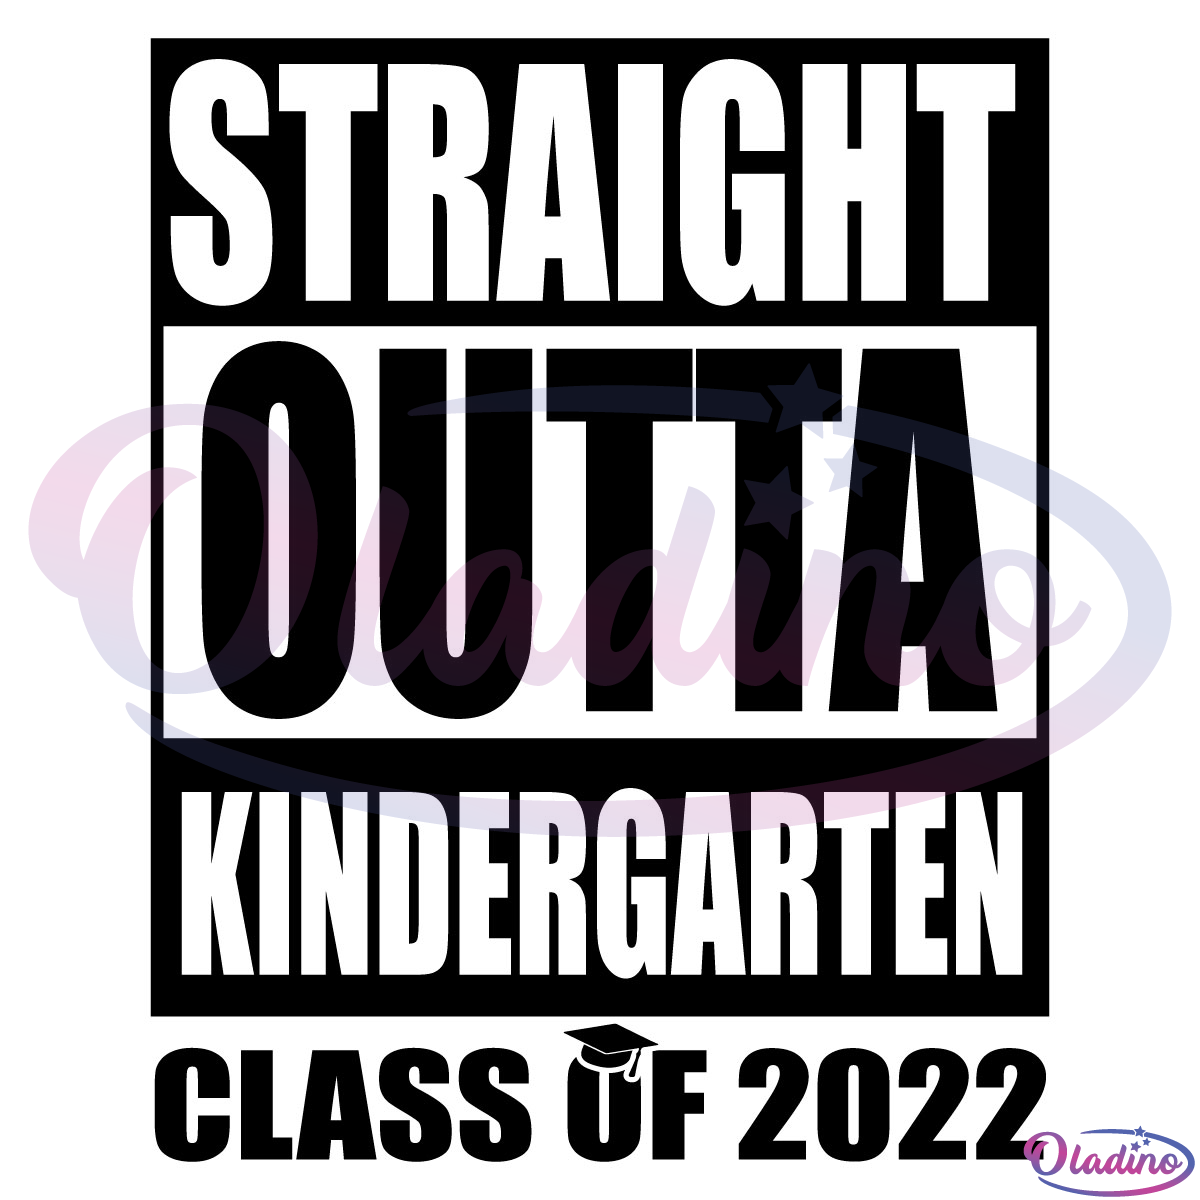 Straight Outta Kindergarten Class Of 2022 Graduation Silhouette